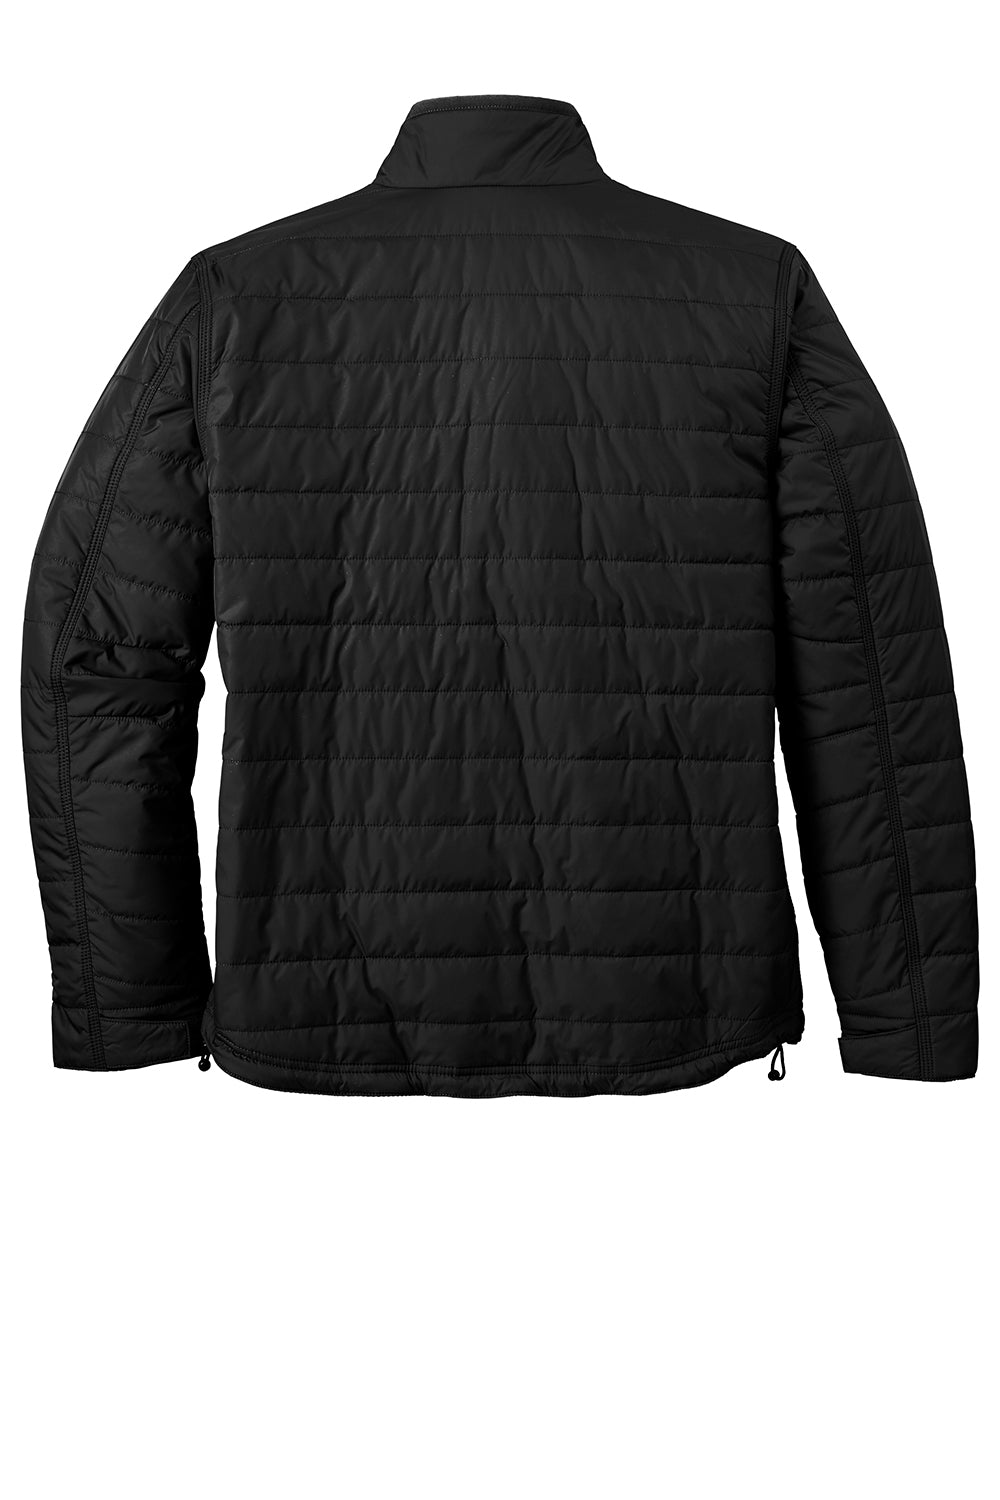 Carhartt CT102208 Mens Gilliam Wind & Water Resistant Full Zip Jacket Black Flat Back